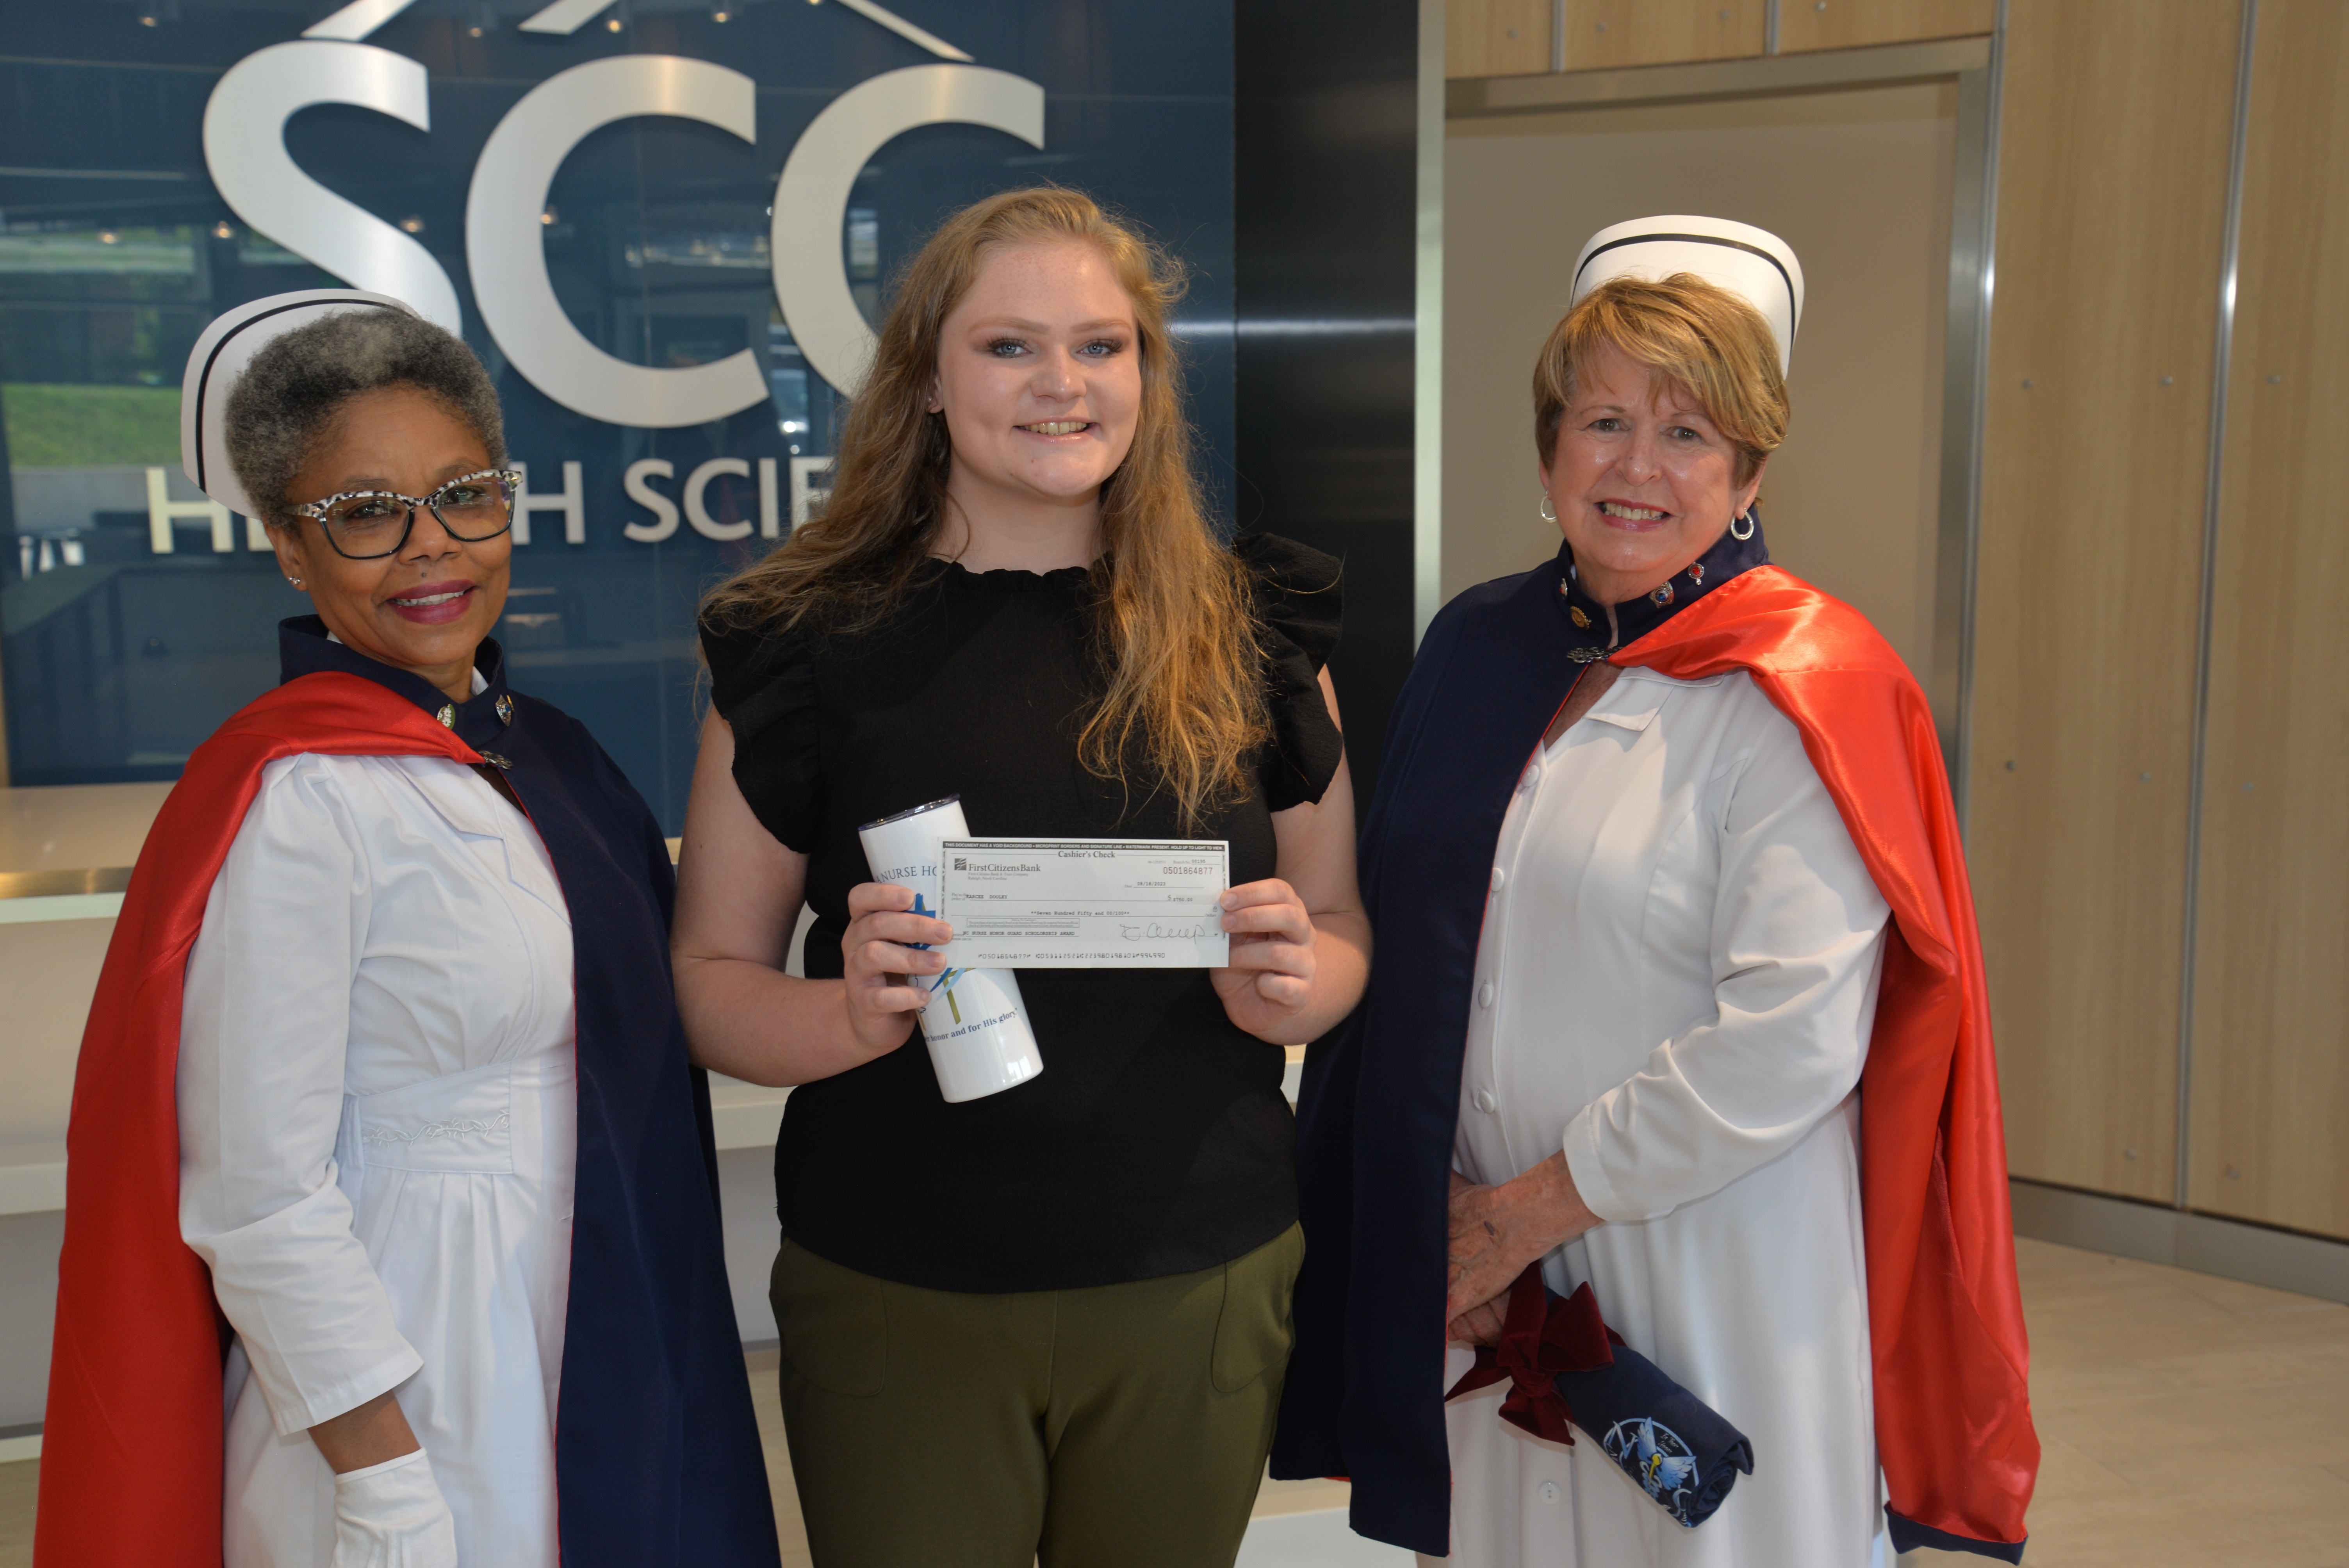 SCC student stands between two ladies wearing nursing uniforms